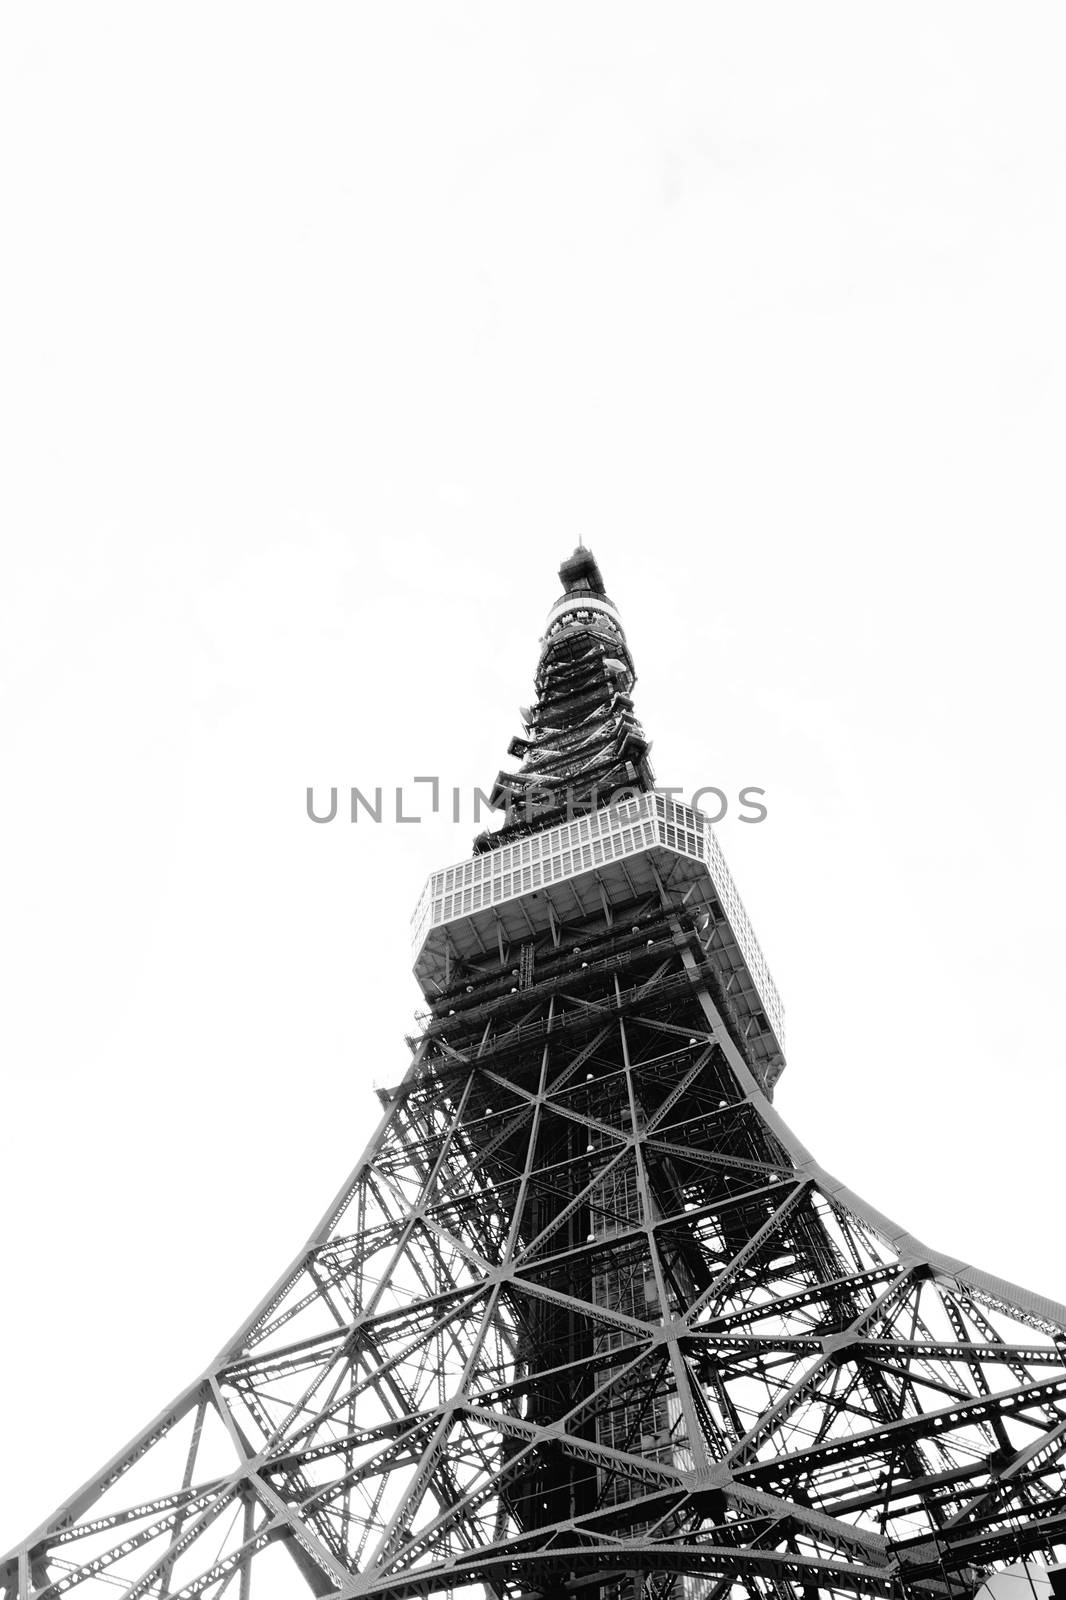 The iconic landmark, Tokyo Tower, in Tokyo, Japan